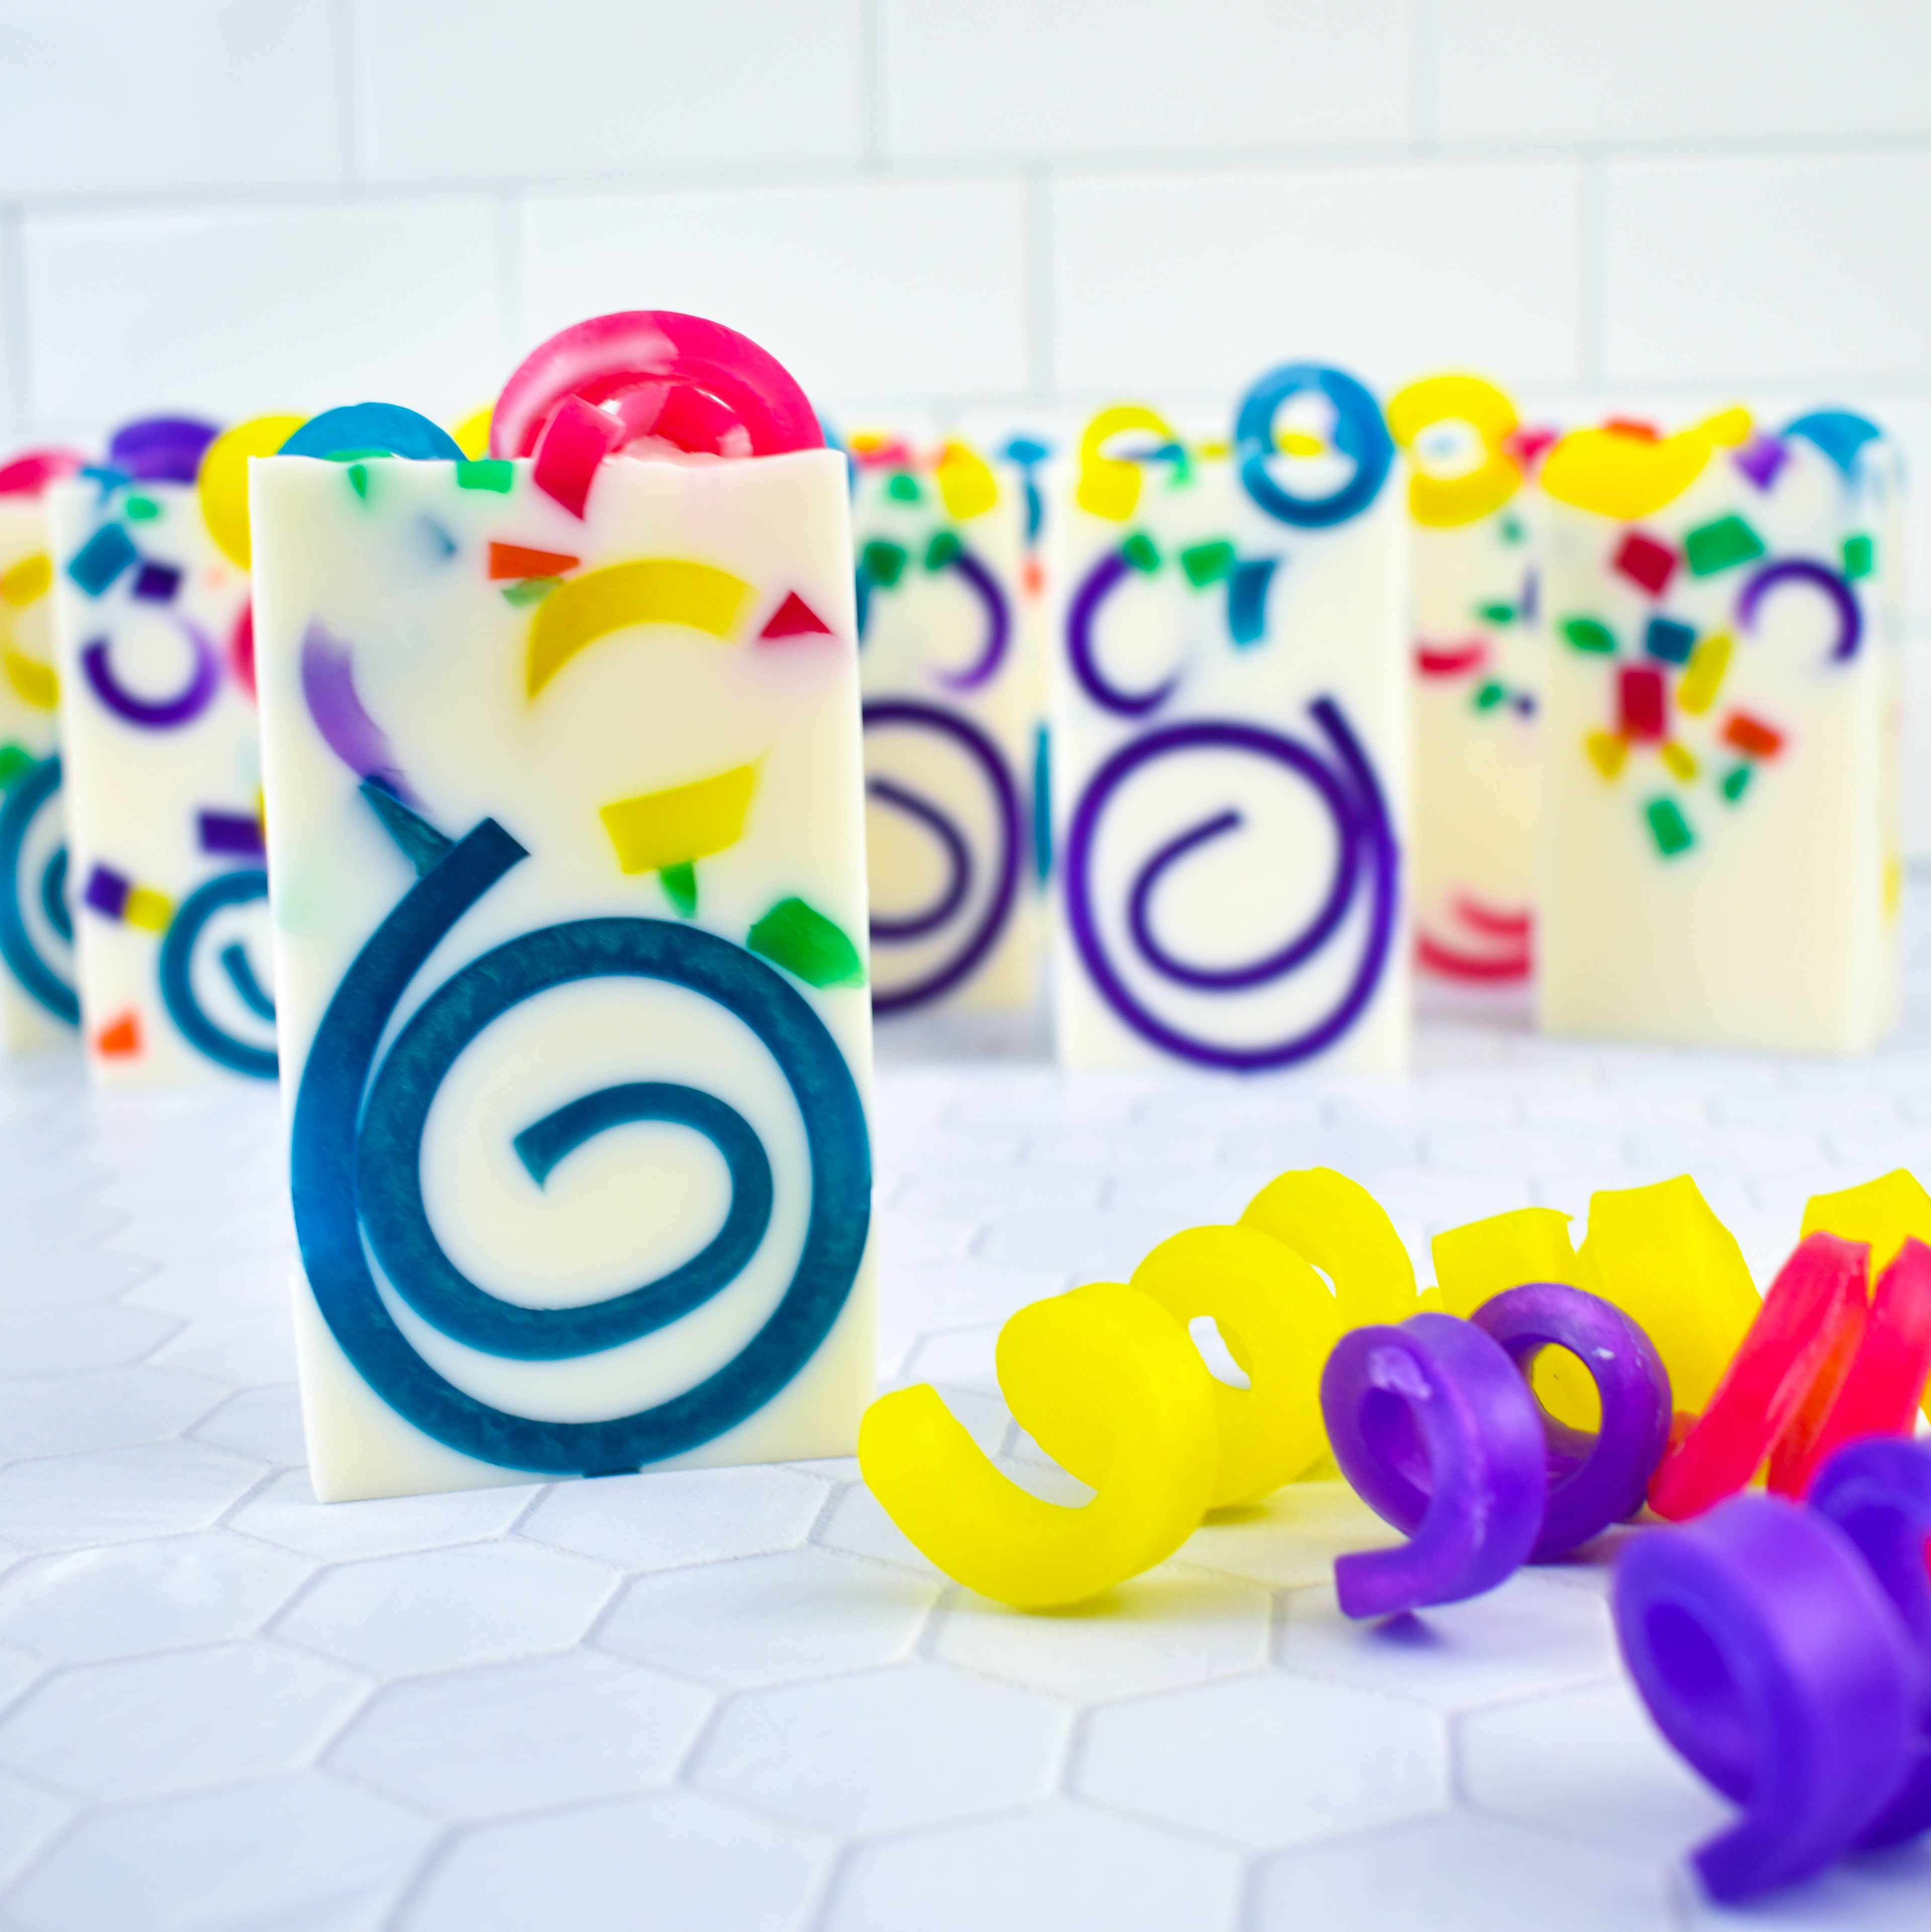 White soaps with a colorful swirl and confetti design